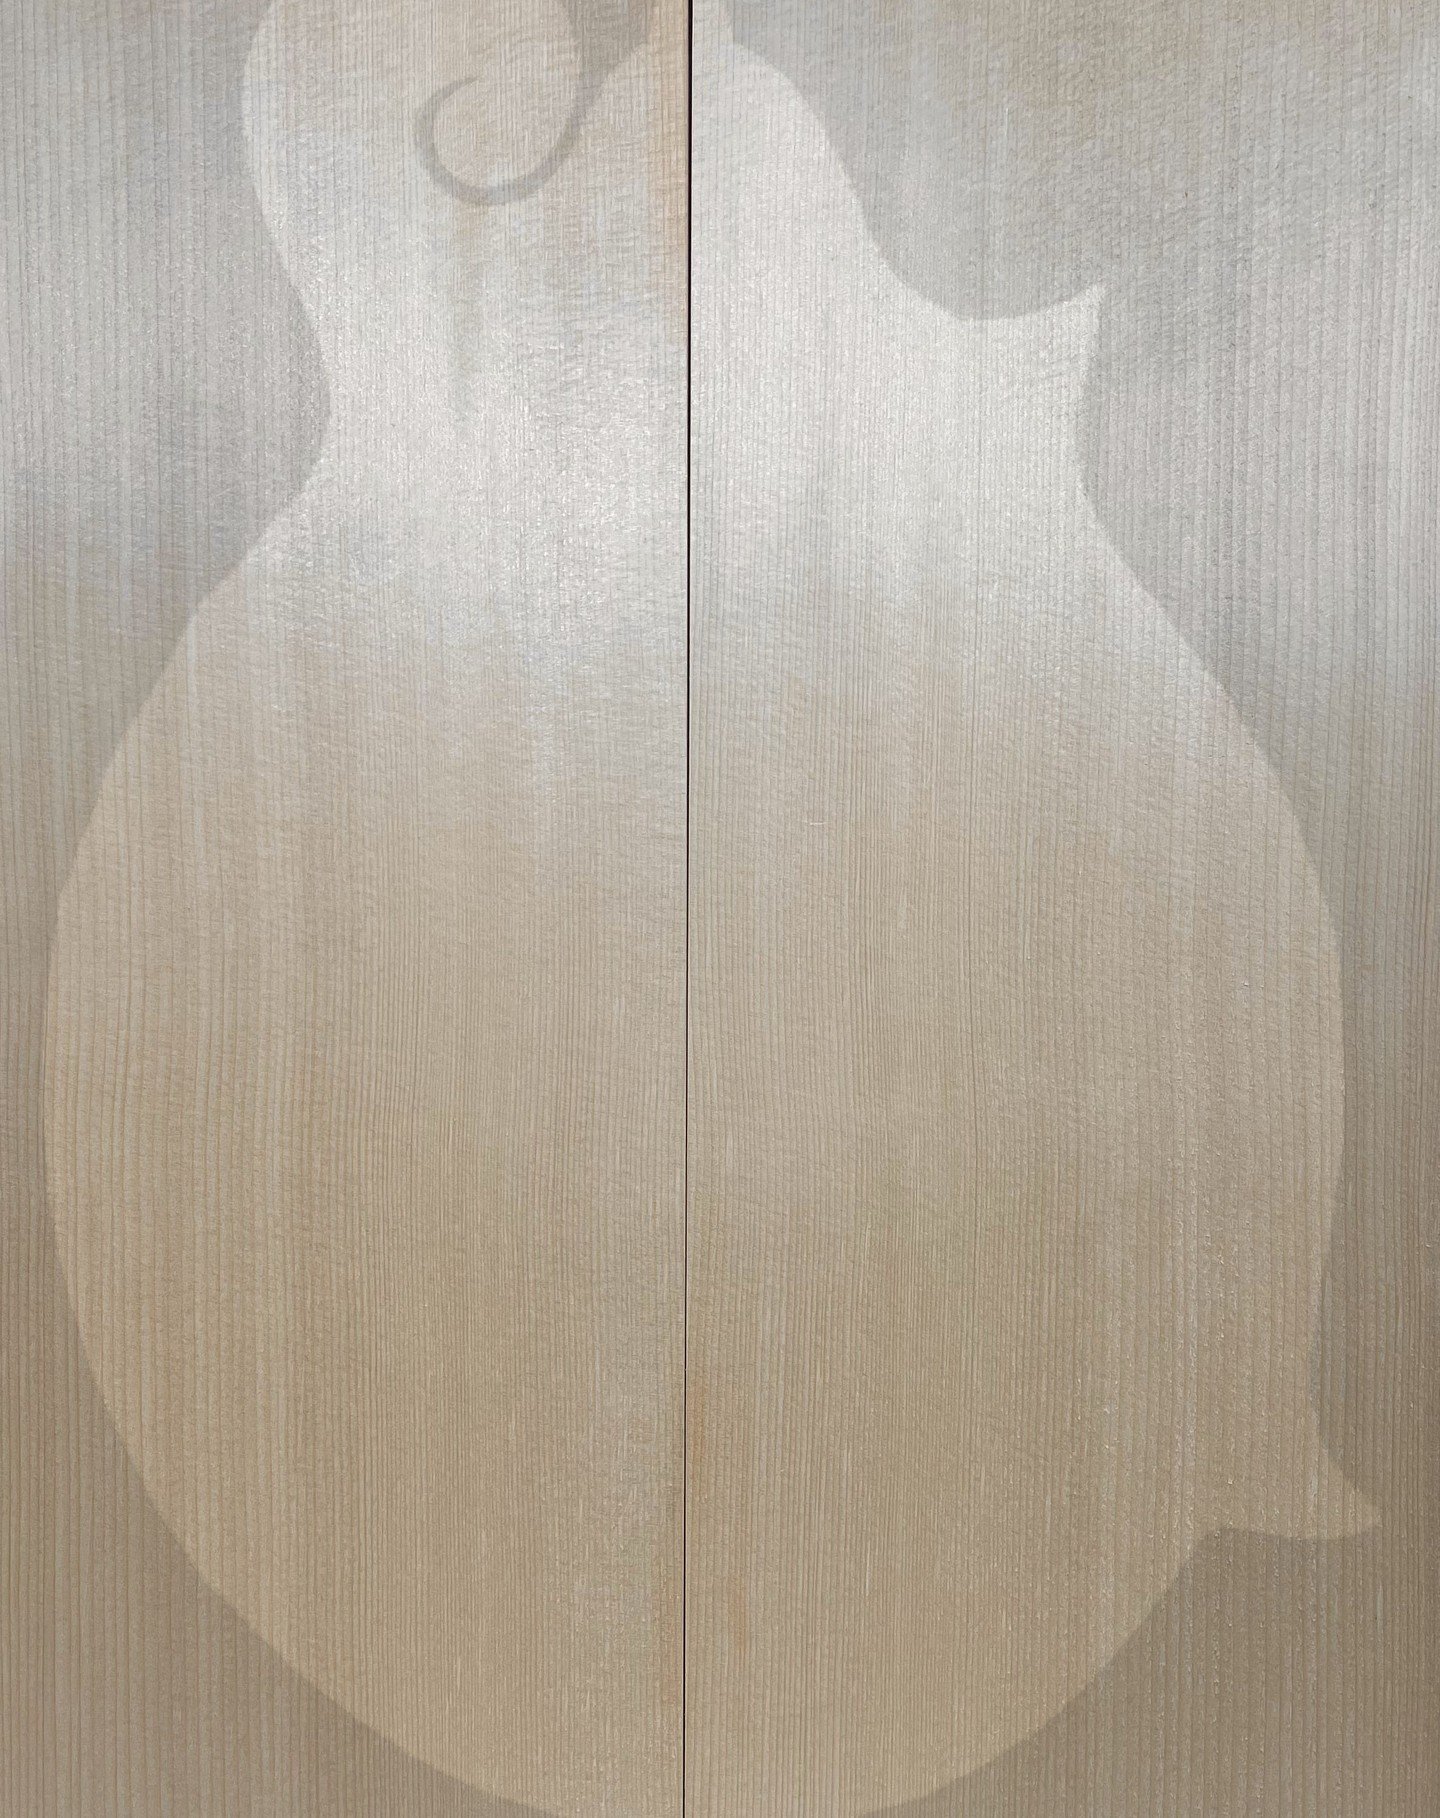 Mandolin Front Grade AAA
West Virginian Red Spruce

Now available on appalachiantonewood.com

#adirondackspruce #adirondackredspruce #appalachian #tonewood #mandolin #mandolina #mandolinforsale #guitar #maker #makersgonnamake #hardwood #spruce #redsp